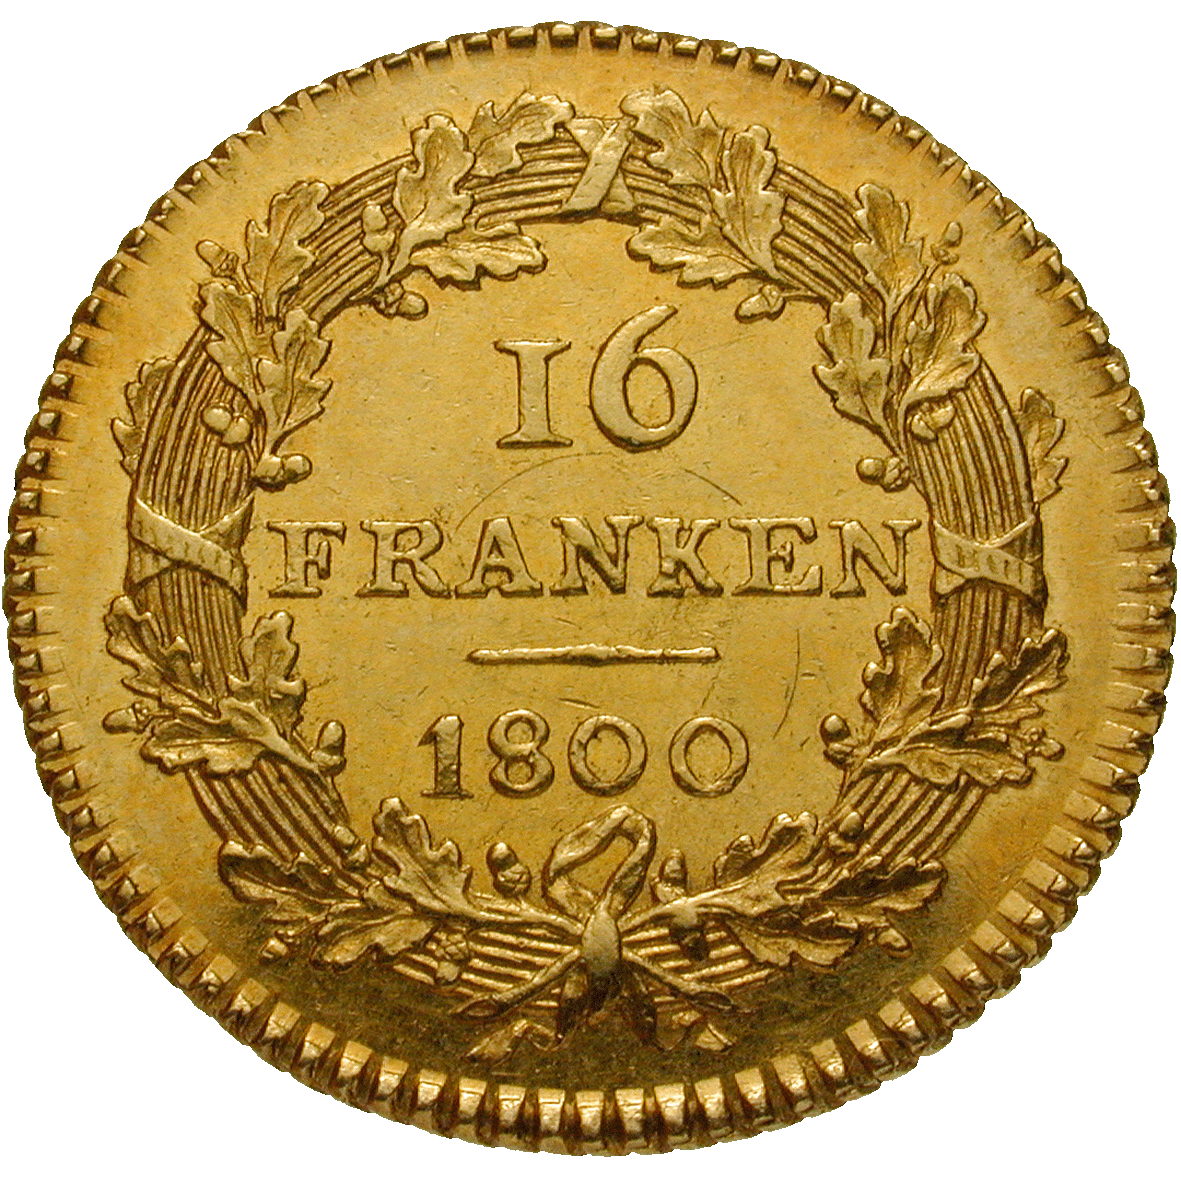 Helvetic Republic, 16 Francs 1800 (reverse)